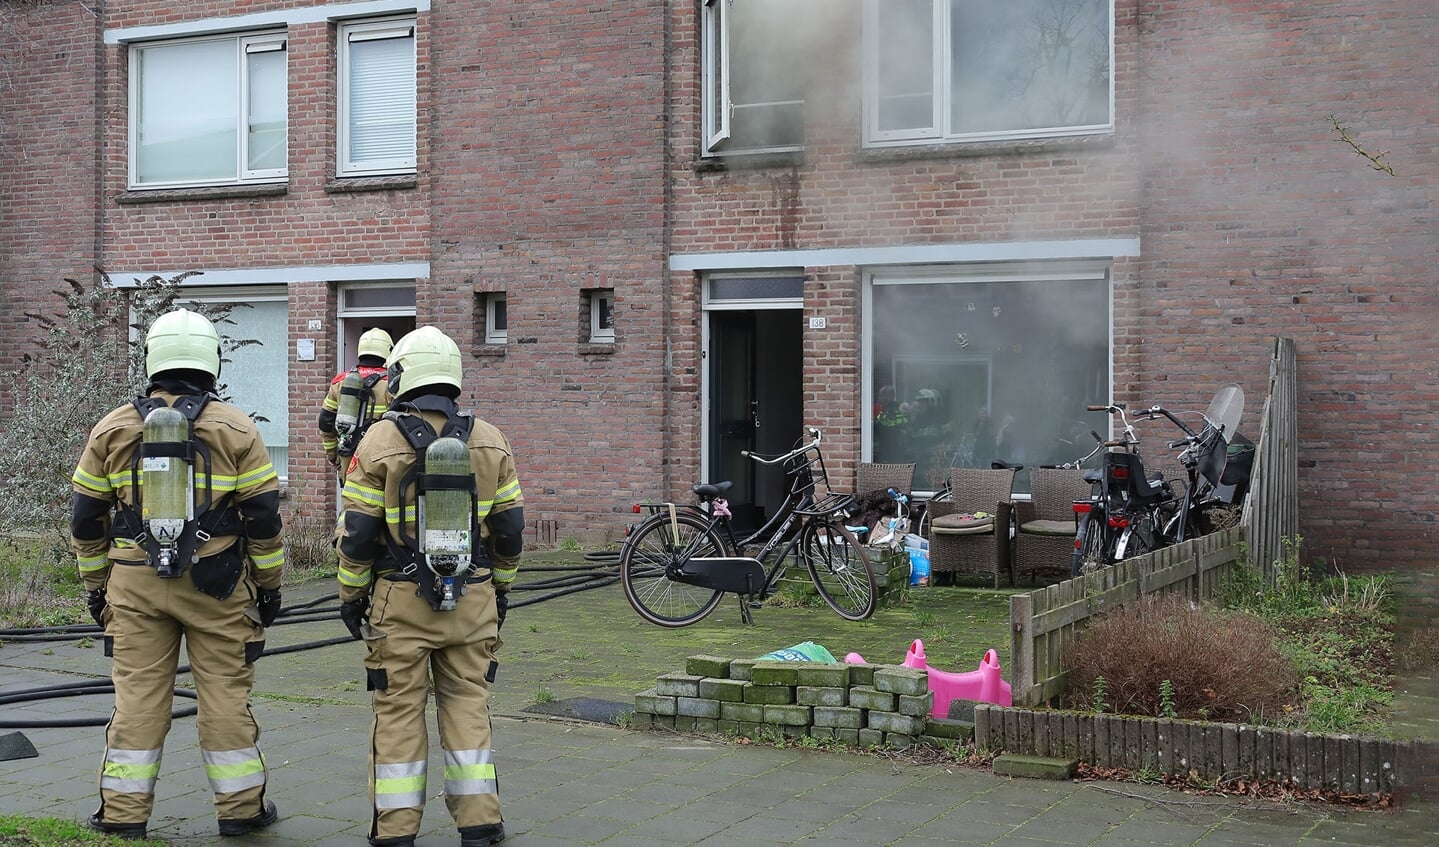 Woningbrand in de Schadewijkstraat. (Foto: Charles Mallo, Foto Mallo)